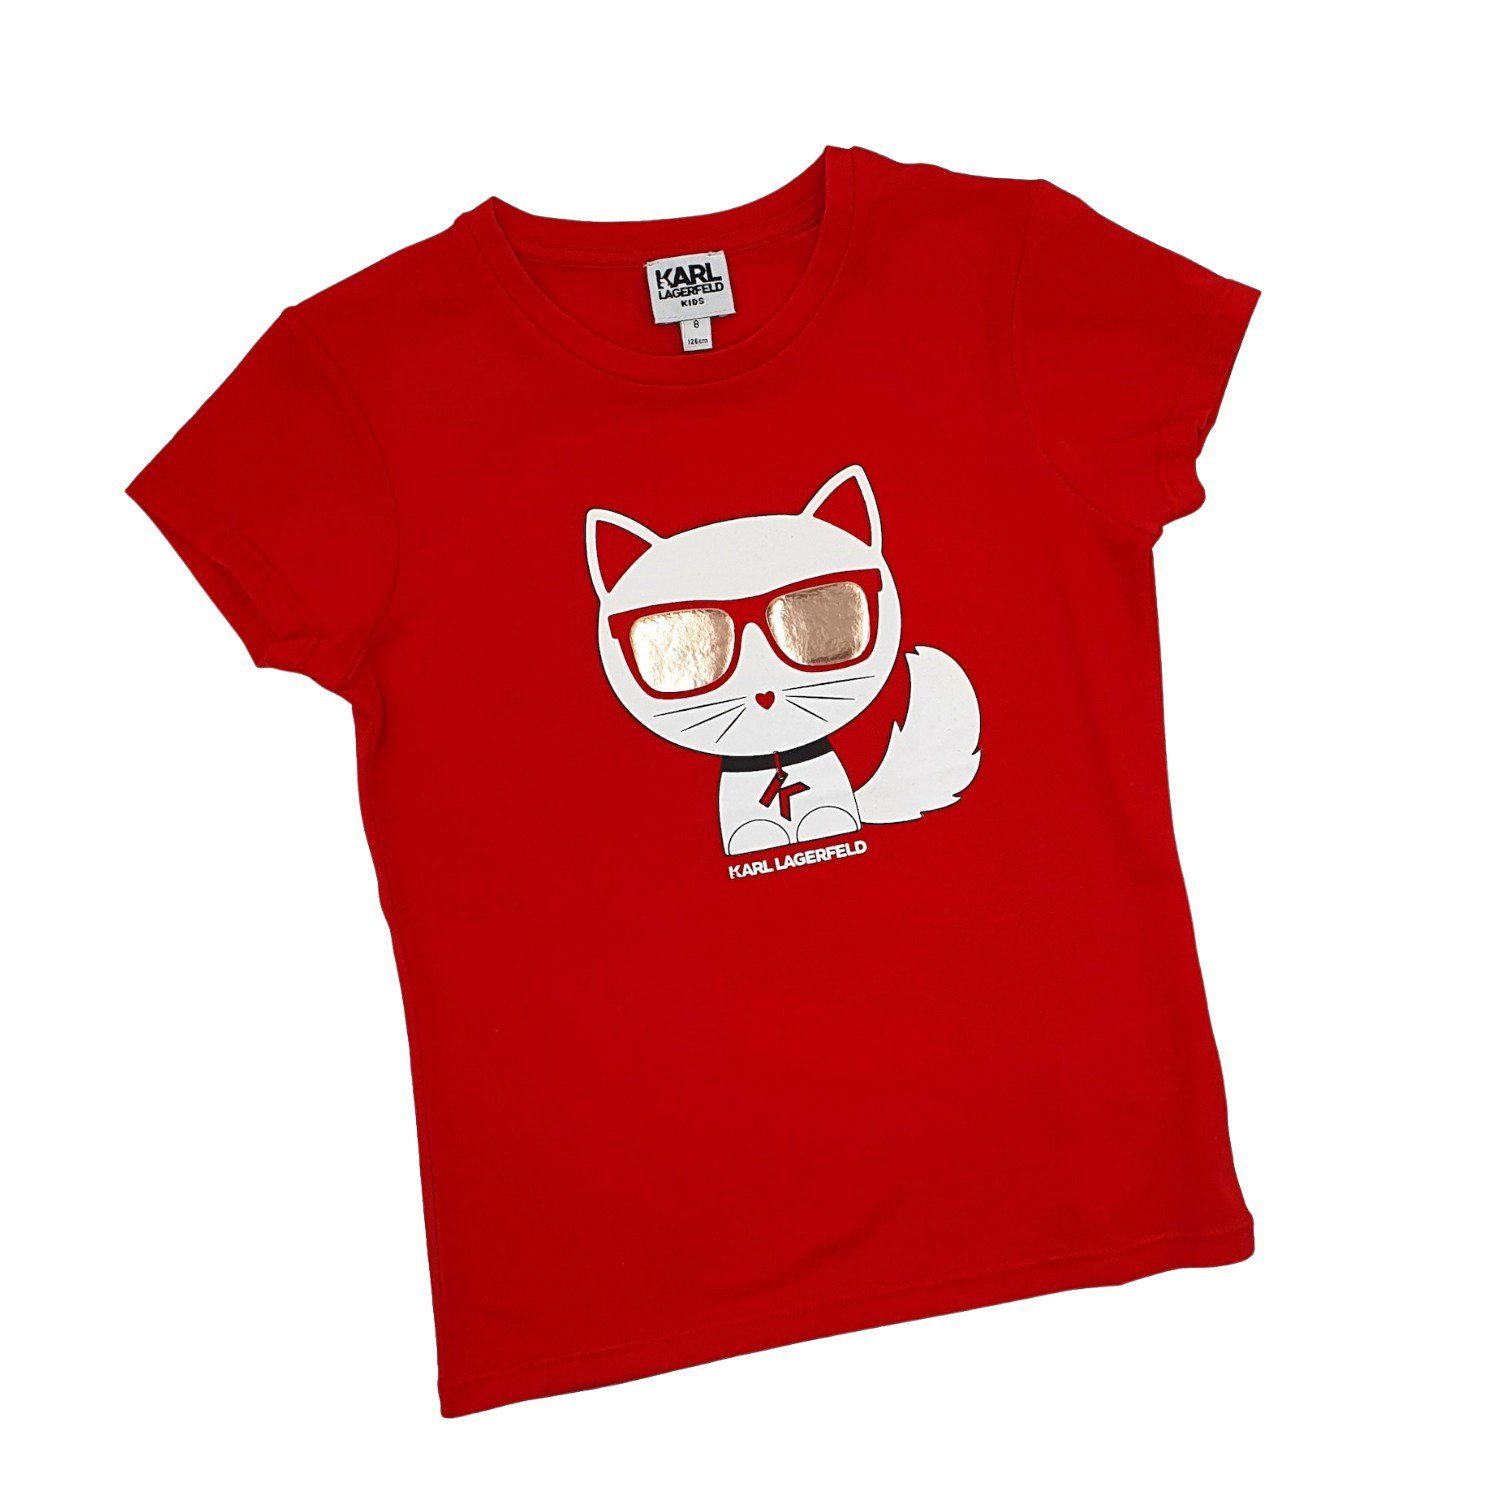 KARL LAGERFELD T-Shirt Karl Lagerfeld T-Shirt rot Katze Choupette